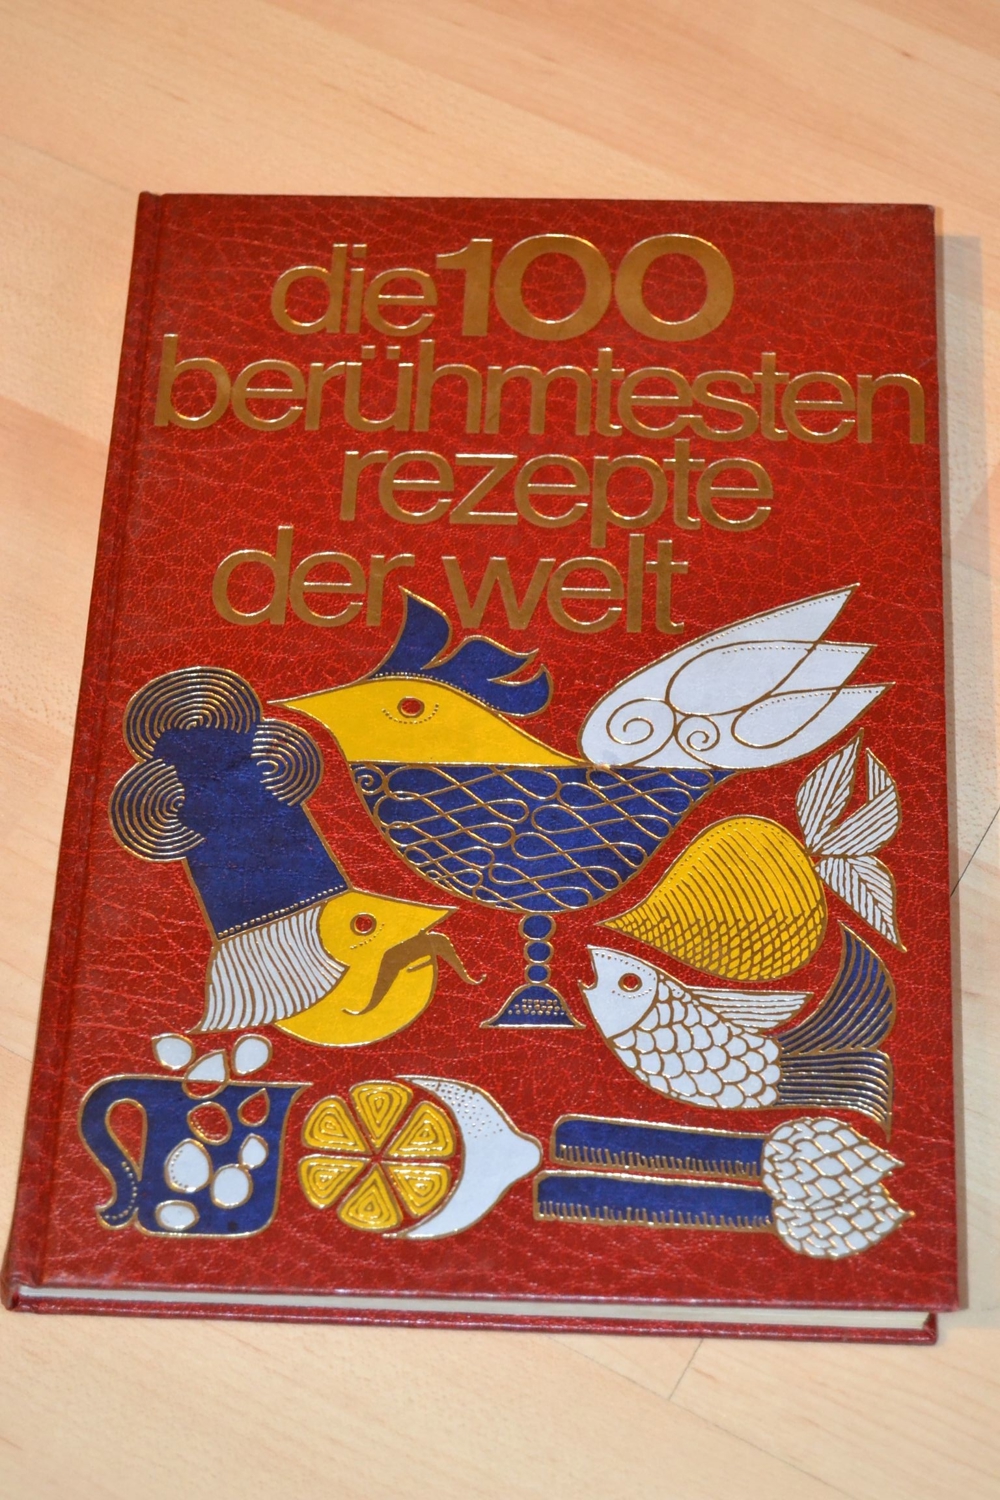 Verkaufe Buch Die 100 berühmtesten Rezepte der Welt ,Farbbild-Kochbuch der internat. Spezialitäten